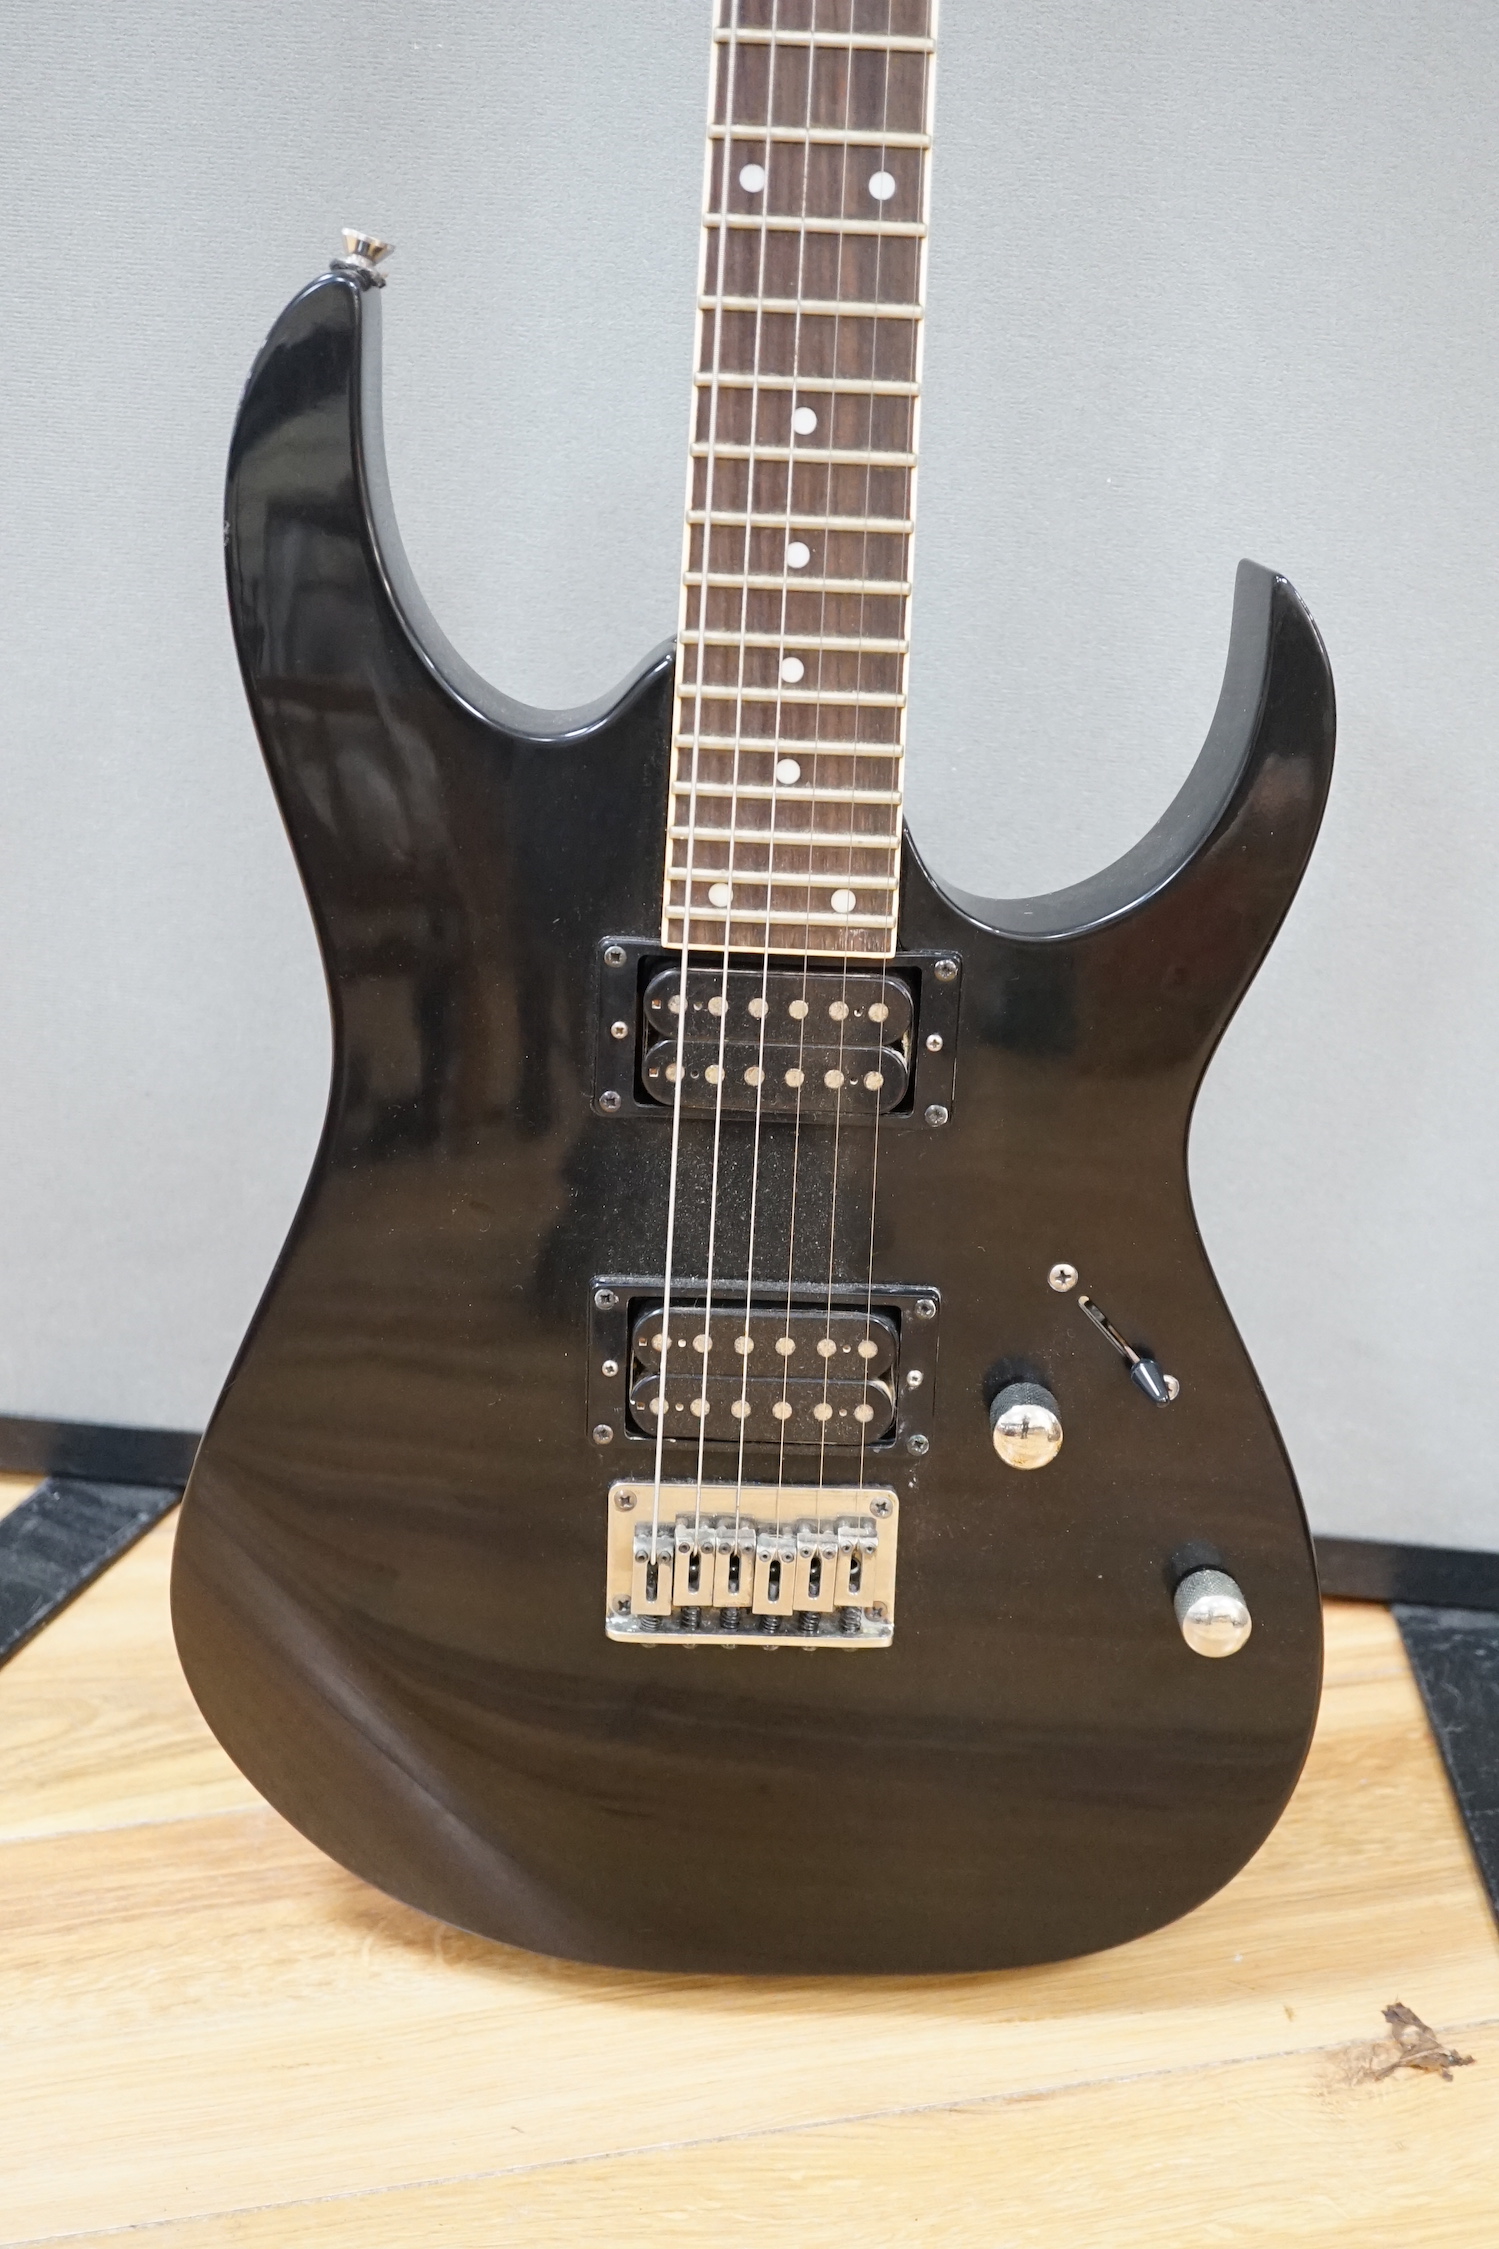 An Ibanez RG series electric guitar